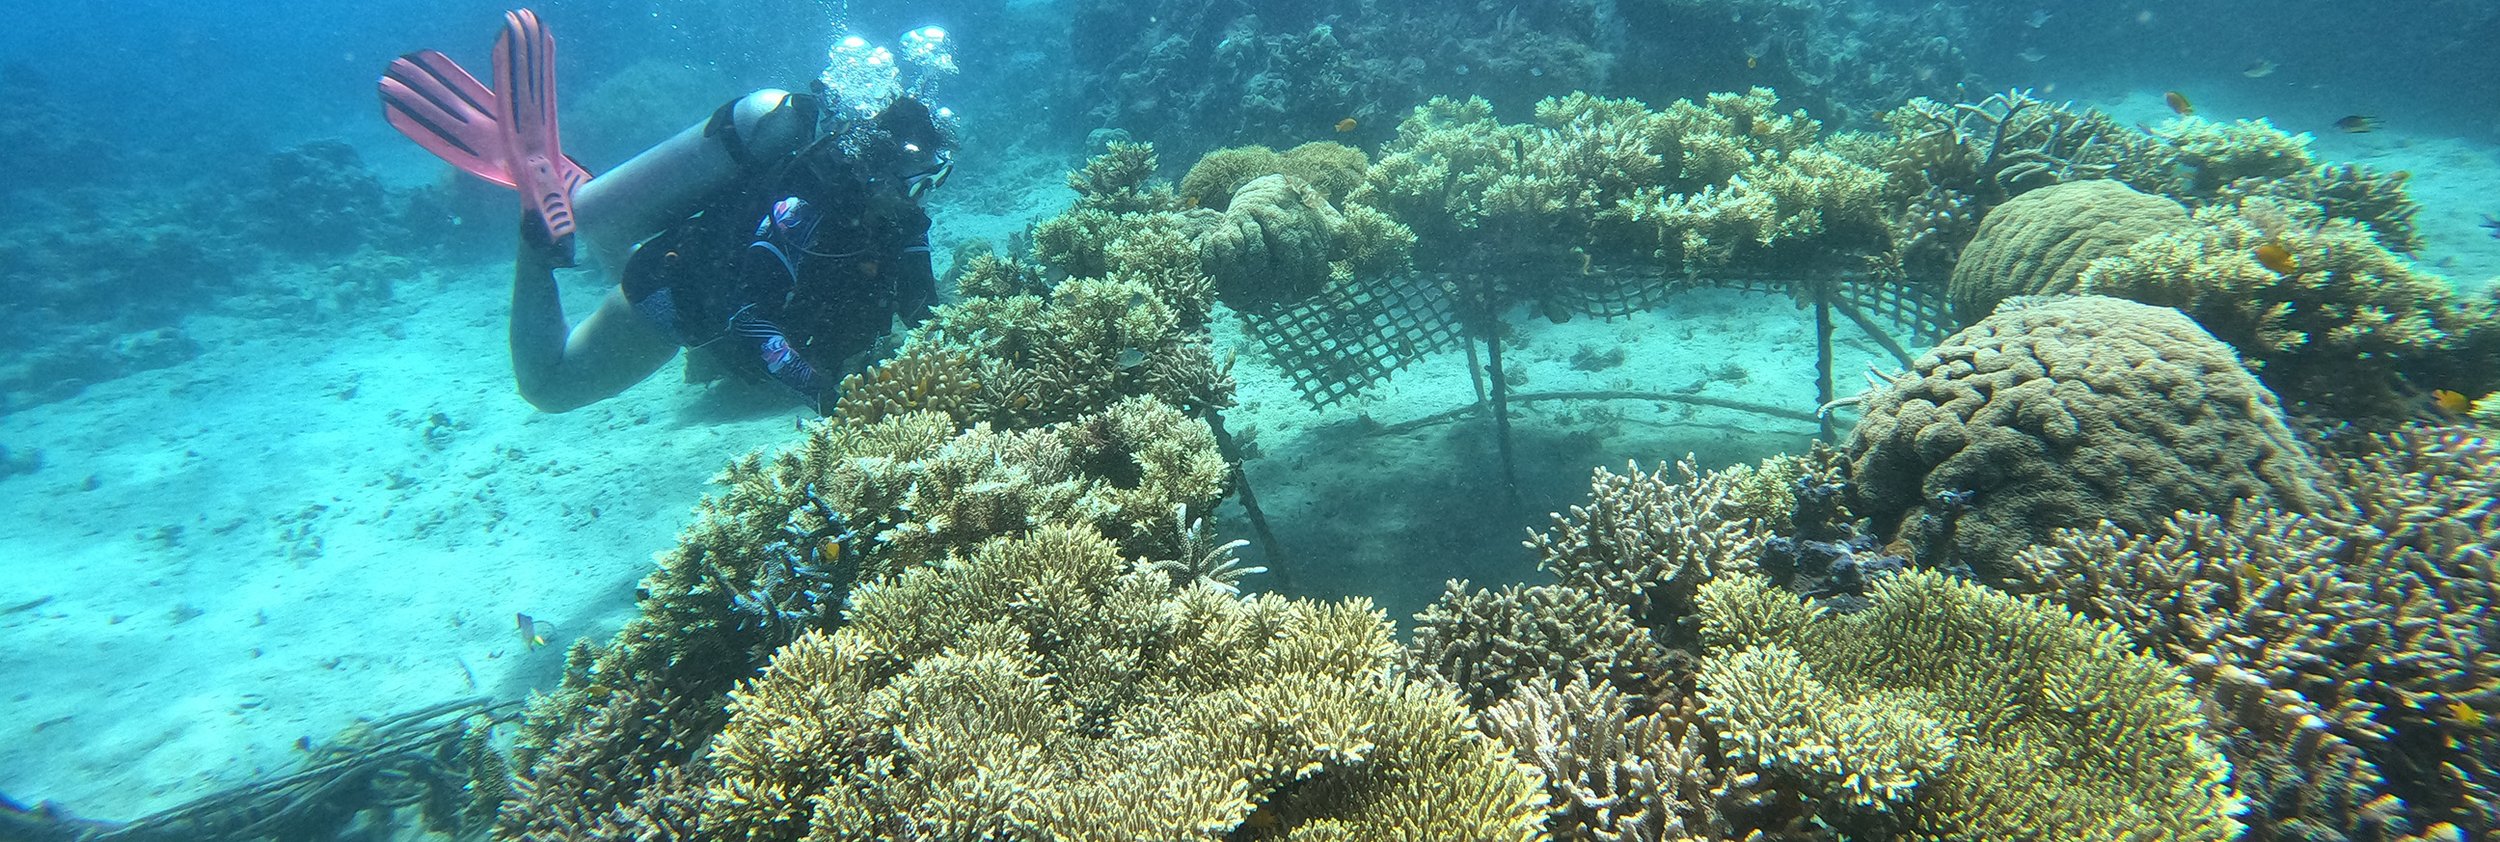 coral restoration dome diver_cropped.jpg